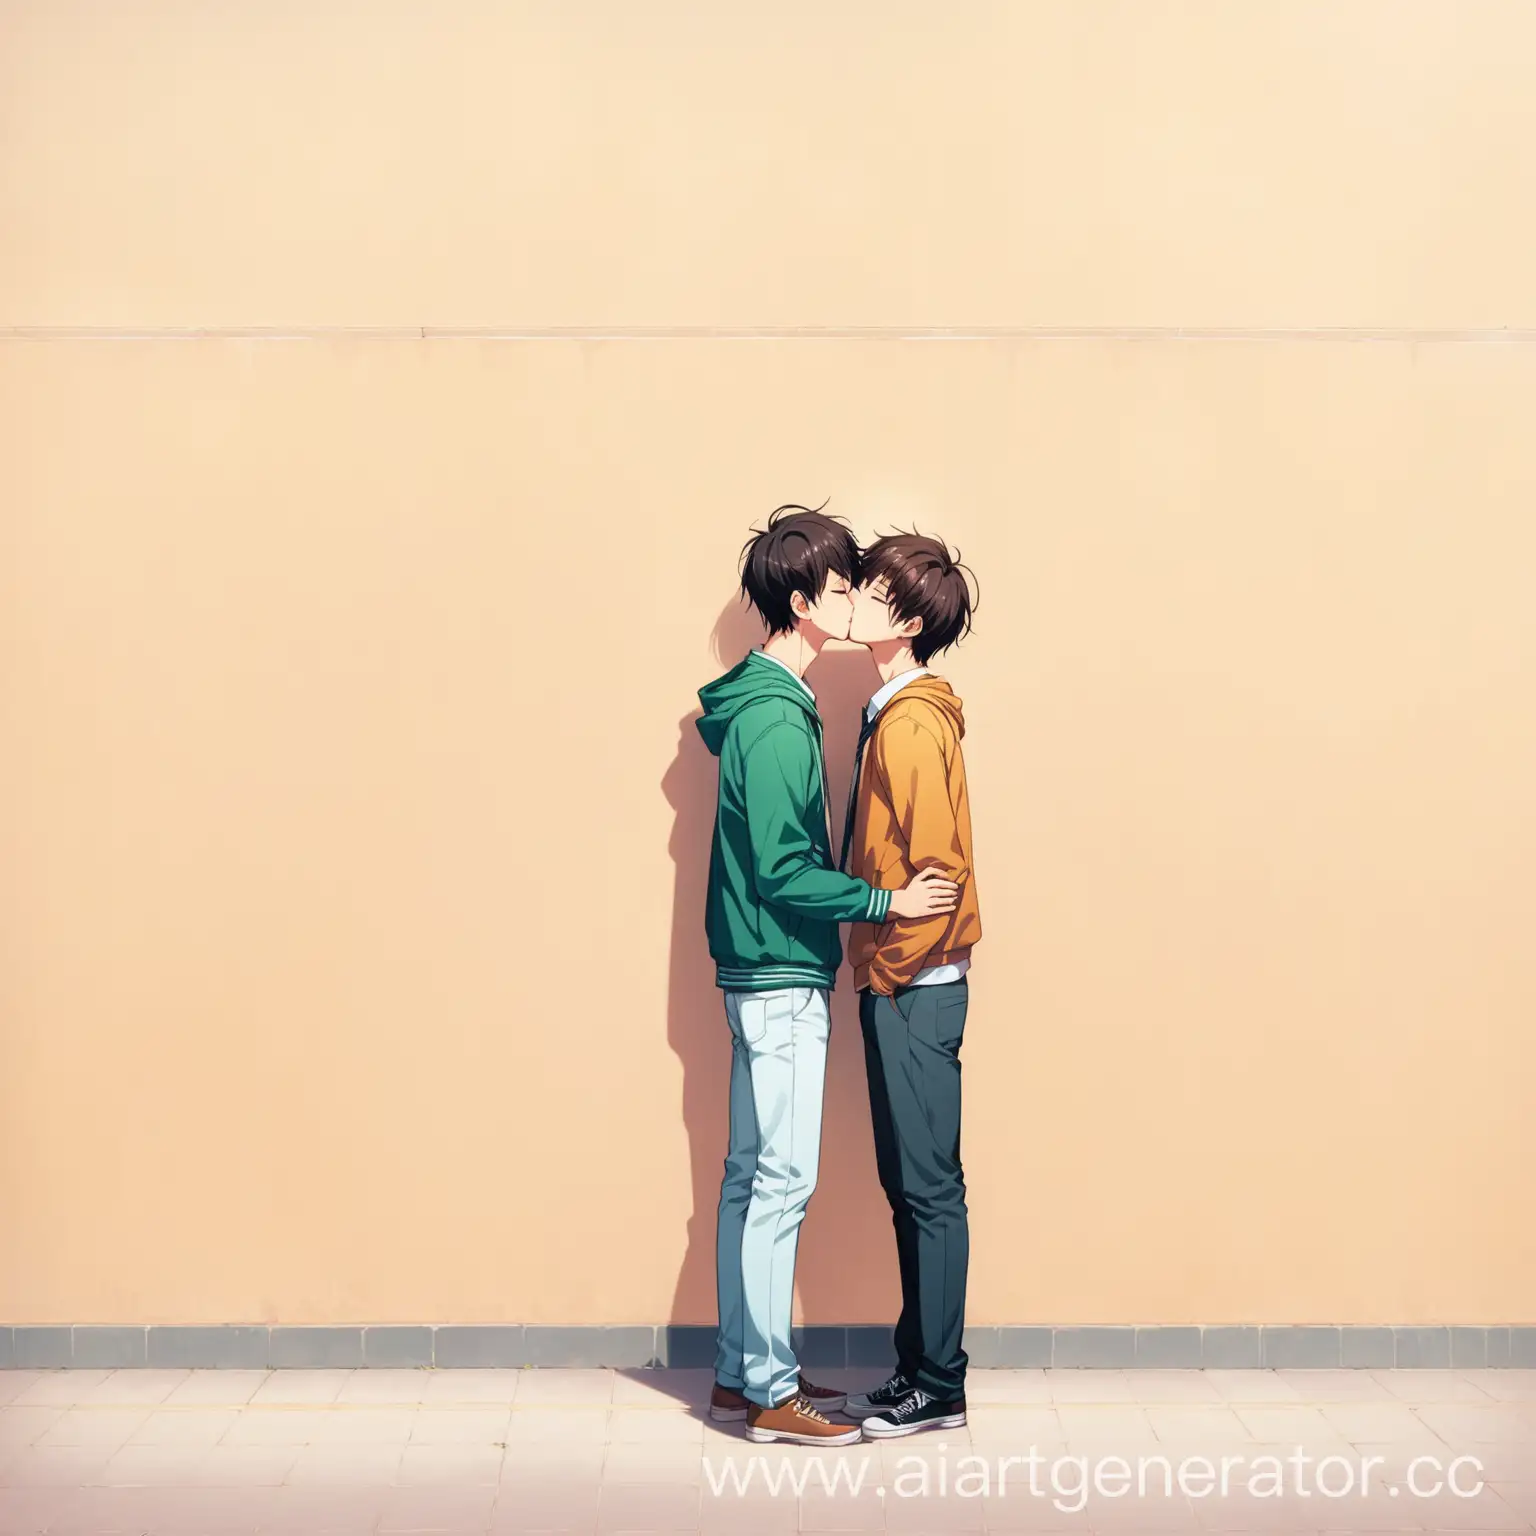 Schoolboys-Kissing-Near-Wall-LGBTQ-Affection-in-Educational-Setting